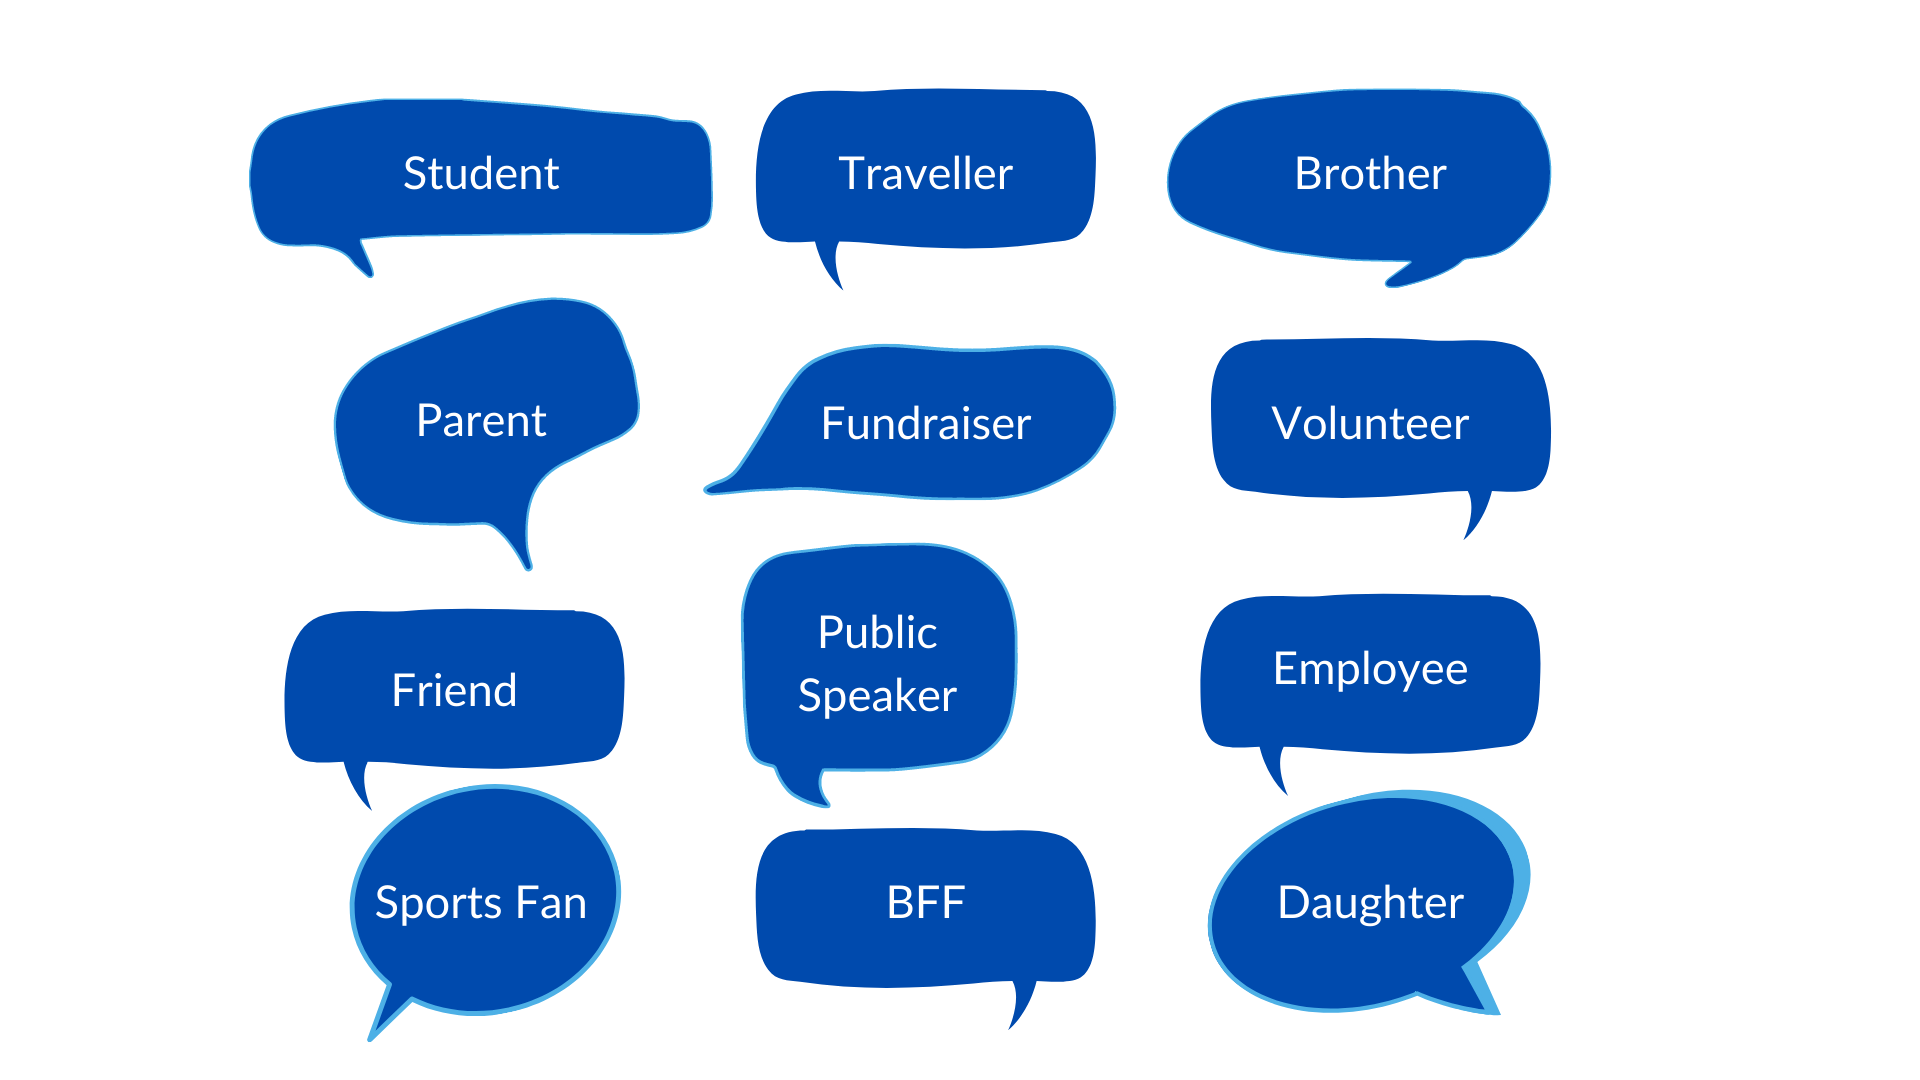 List of valued roles: student, traveller, brother, parent, fundraiser, volunteer, friend, public speaker, employee, sports fan, BFF, daughter